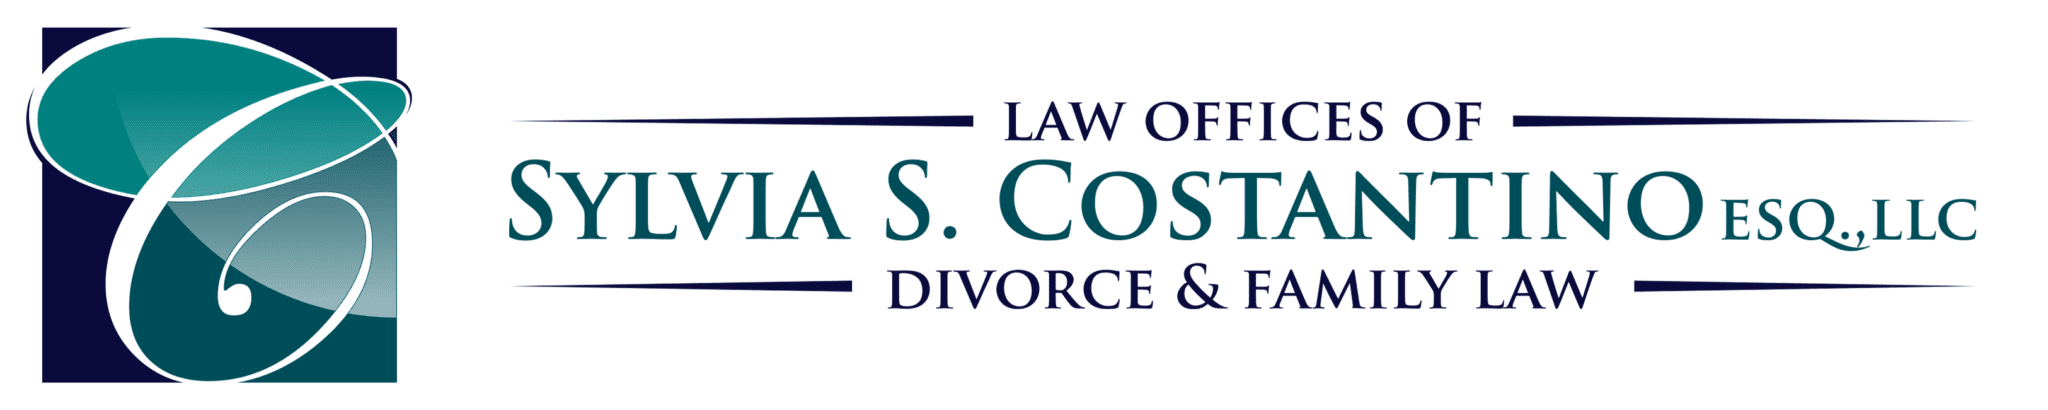 Sylvia S. Costantino Esq., LLC Logo